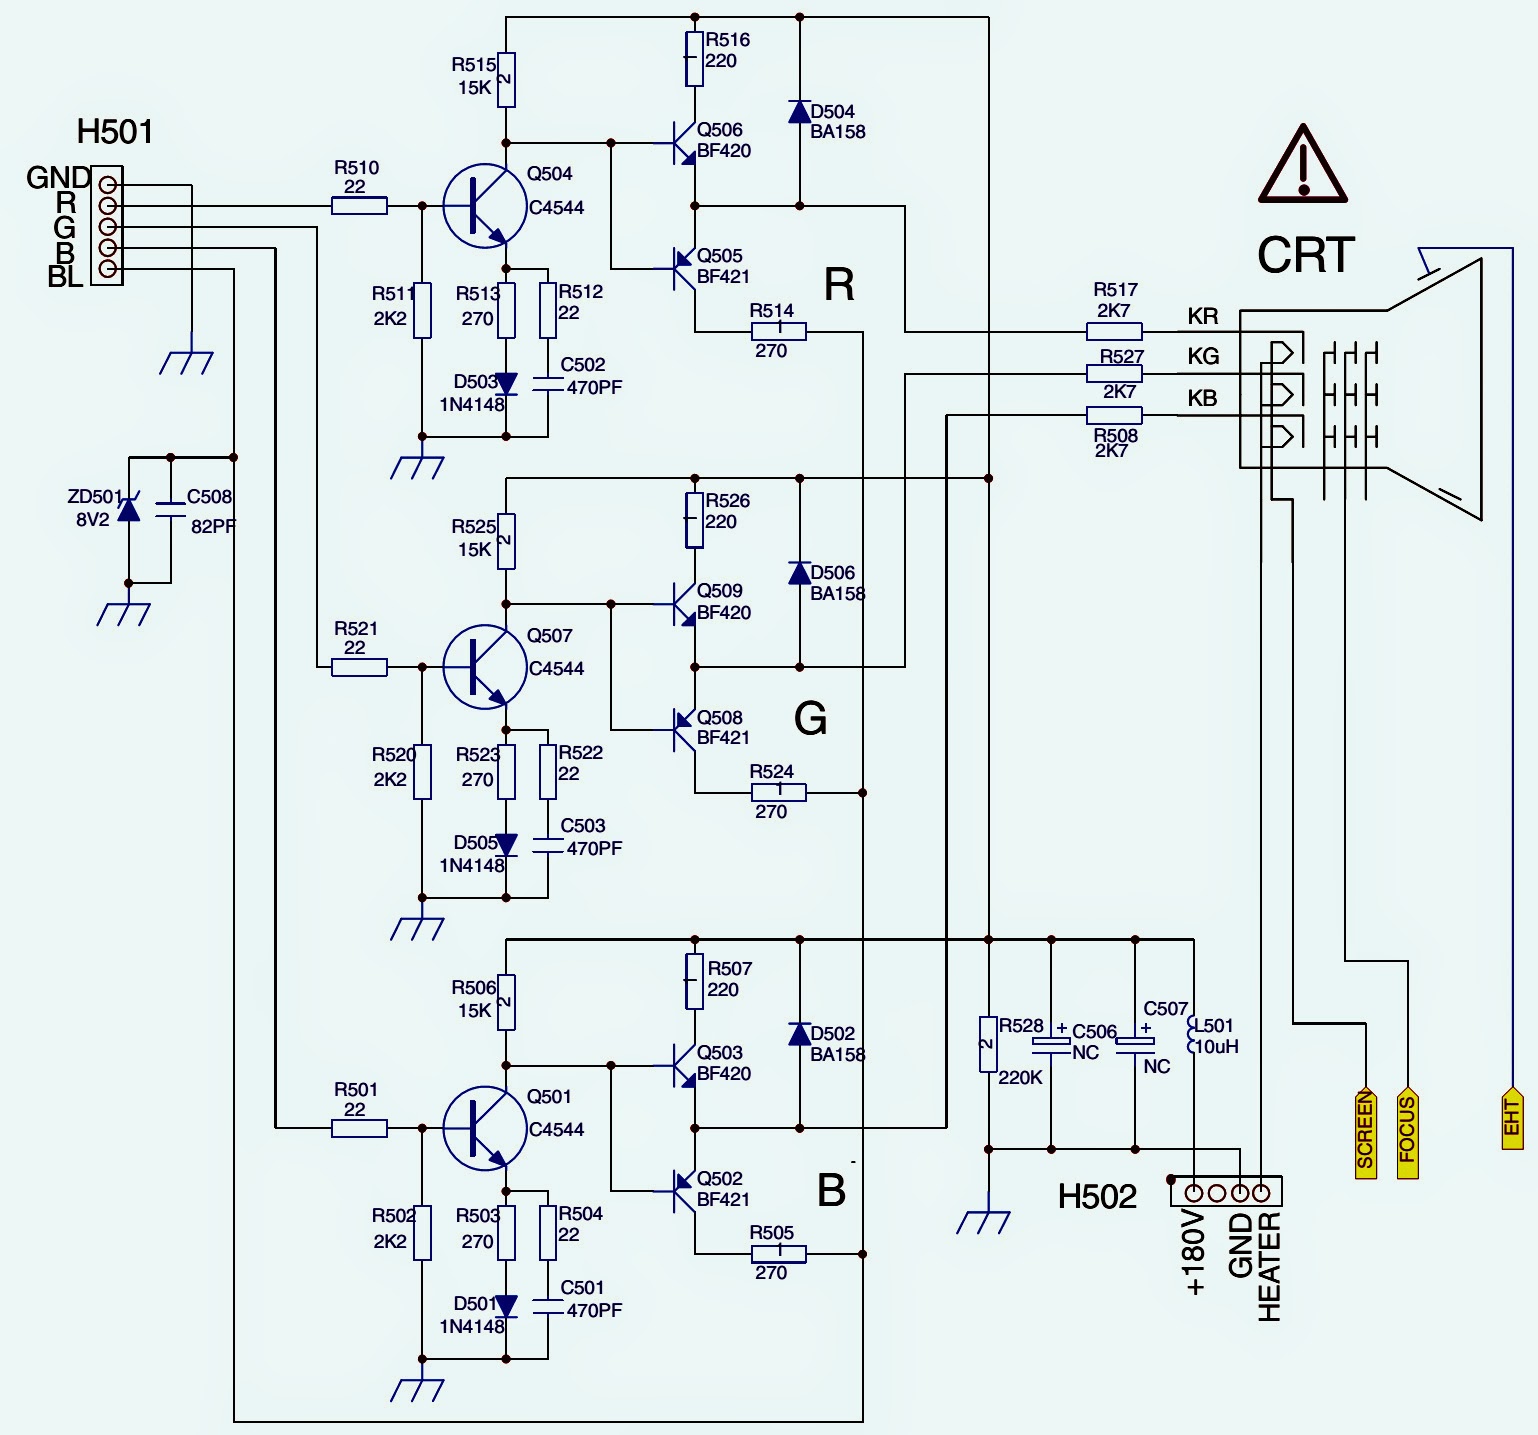 vertical redraw of wiring diagram